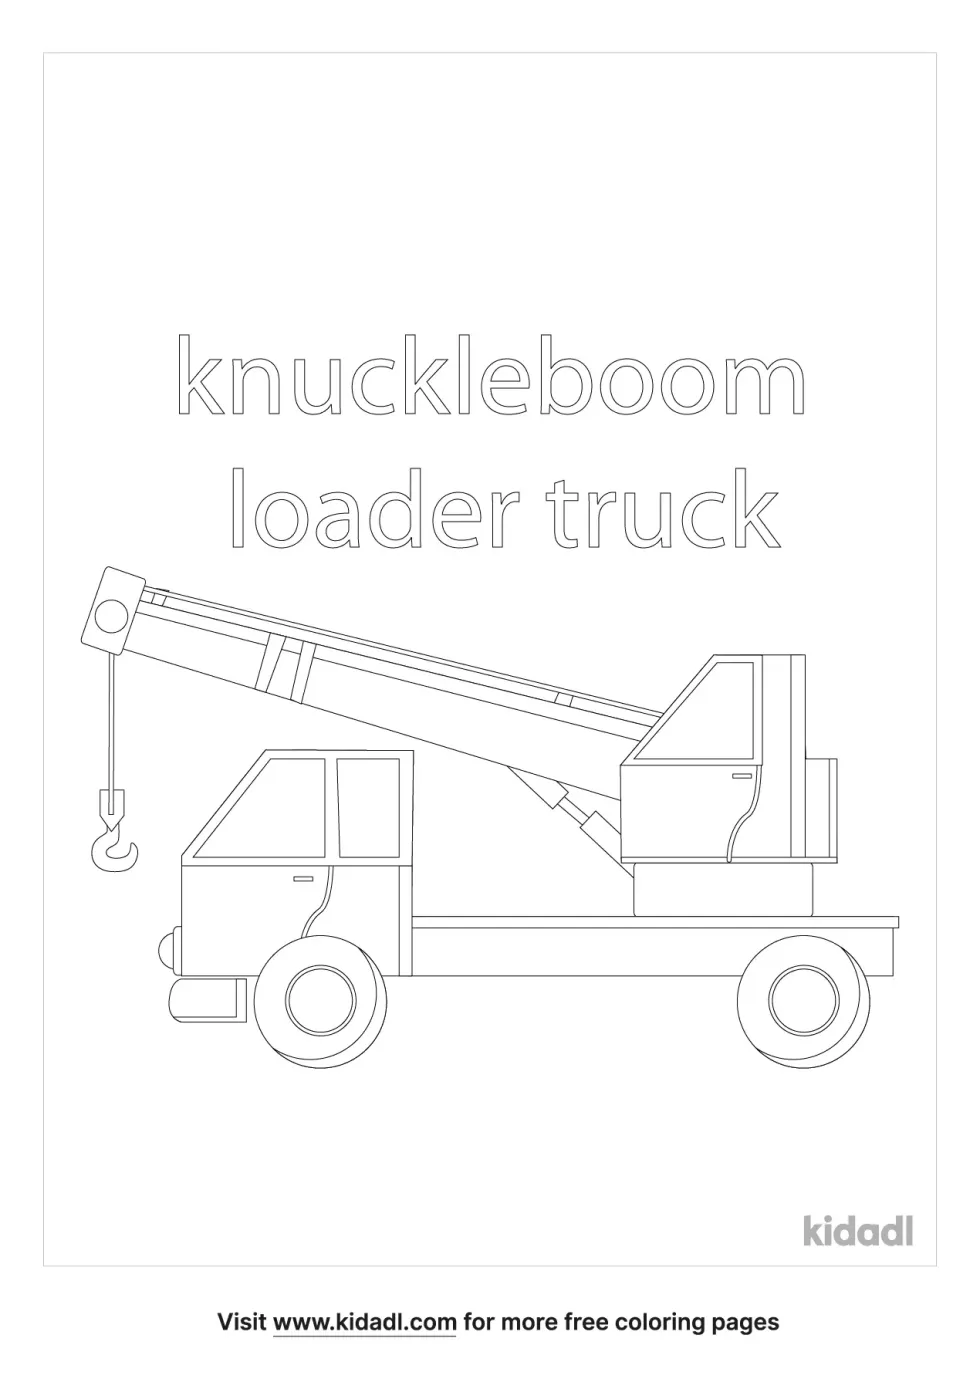 Knuckleboom Loader Truck Coloring Page